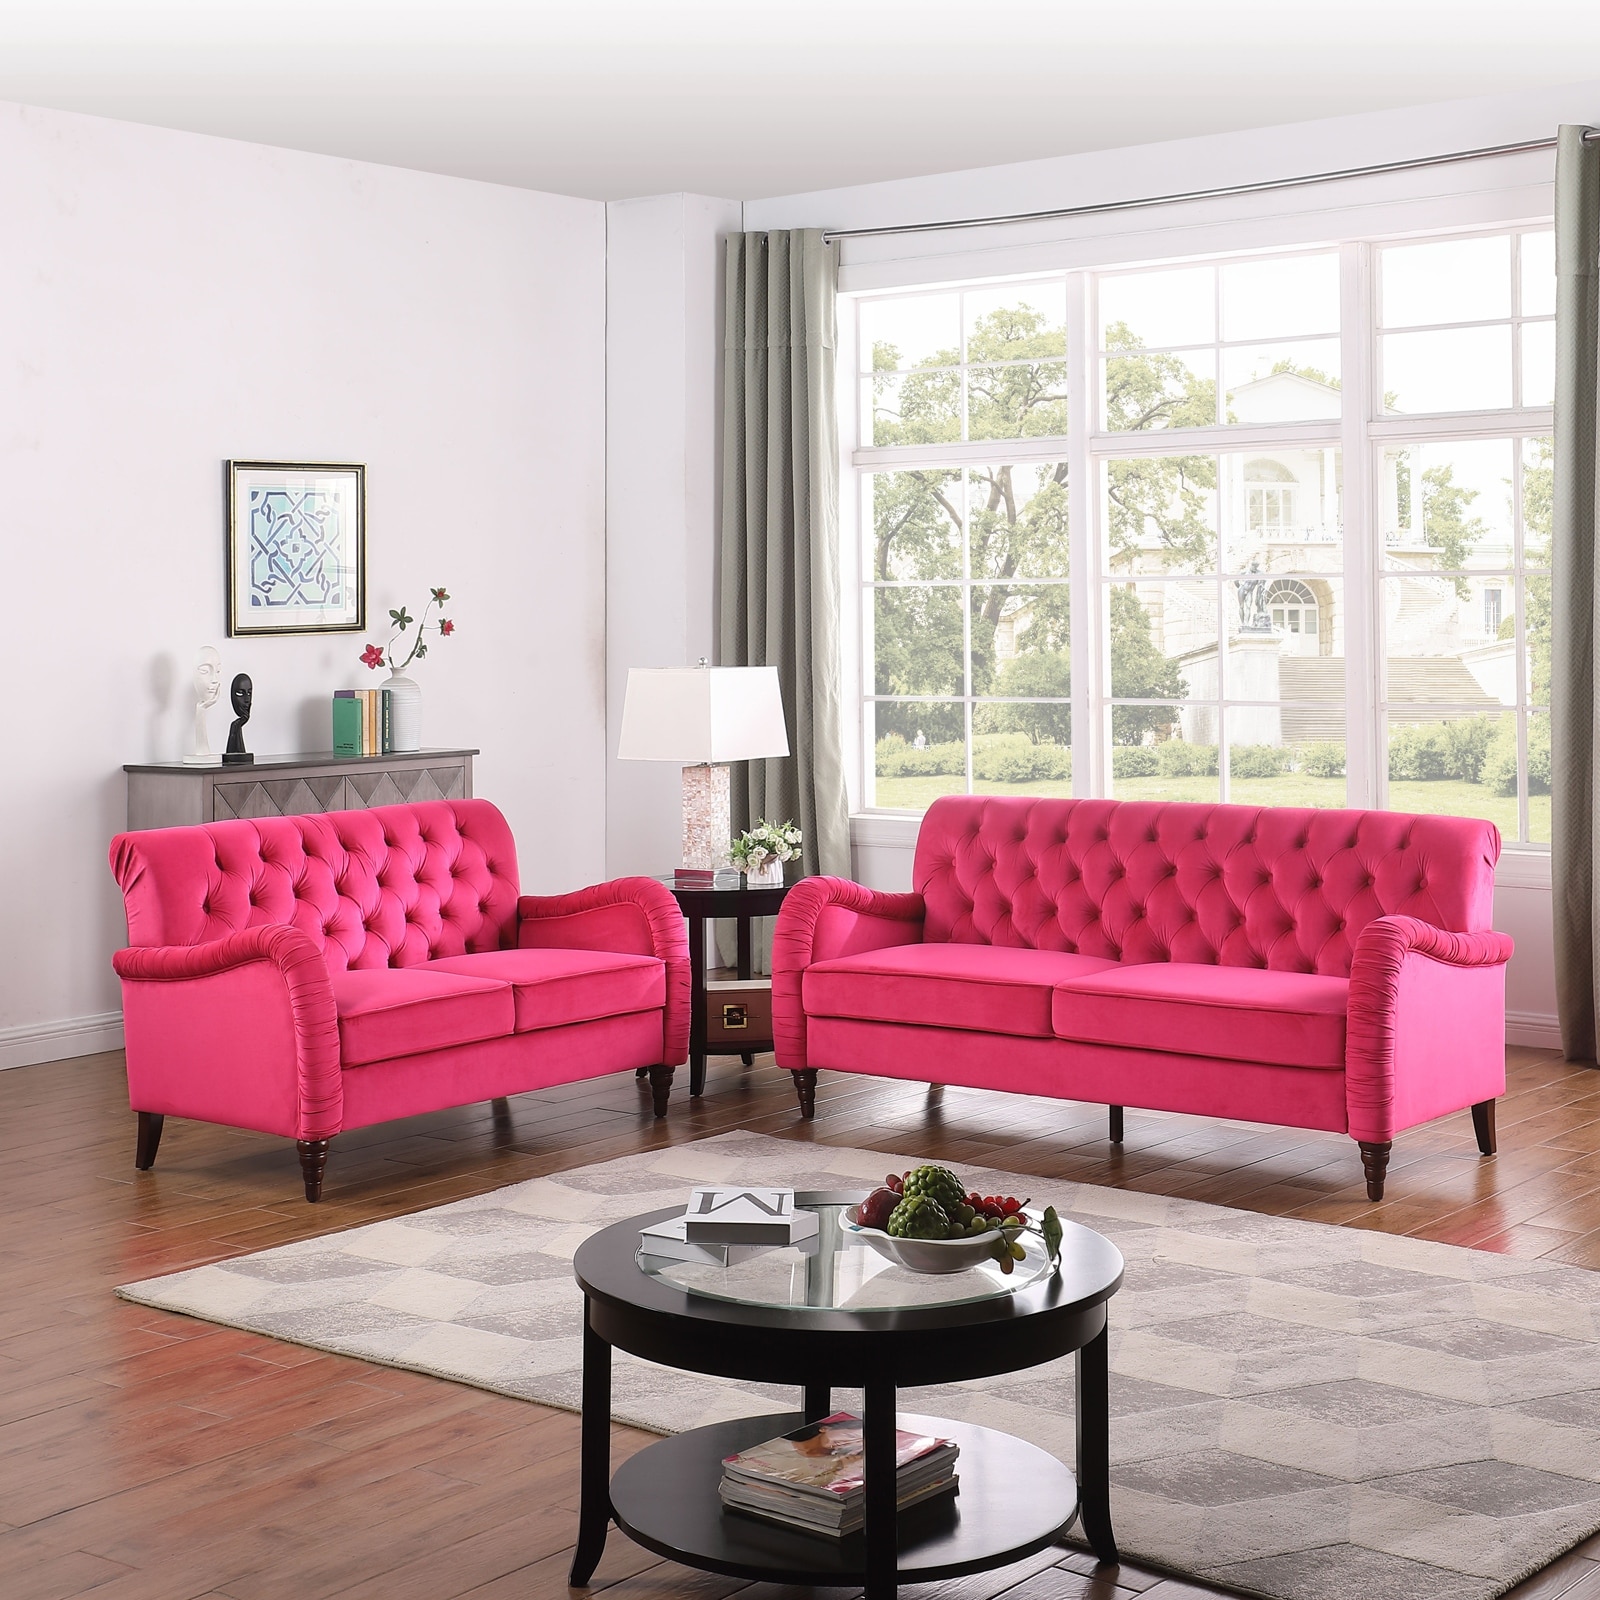 3 Seater Fuchsia Pink Crushed Velvet Fabric Chesterfield Sofa